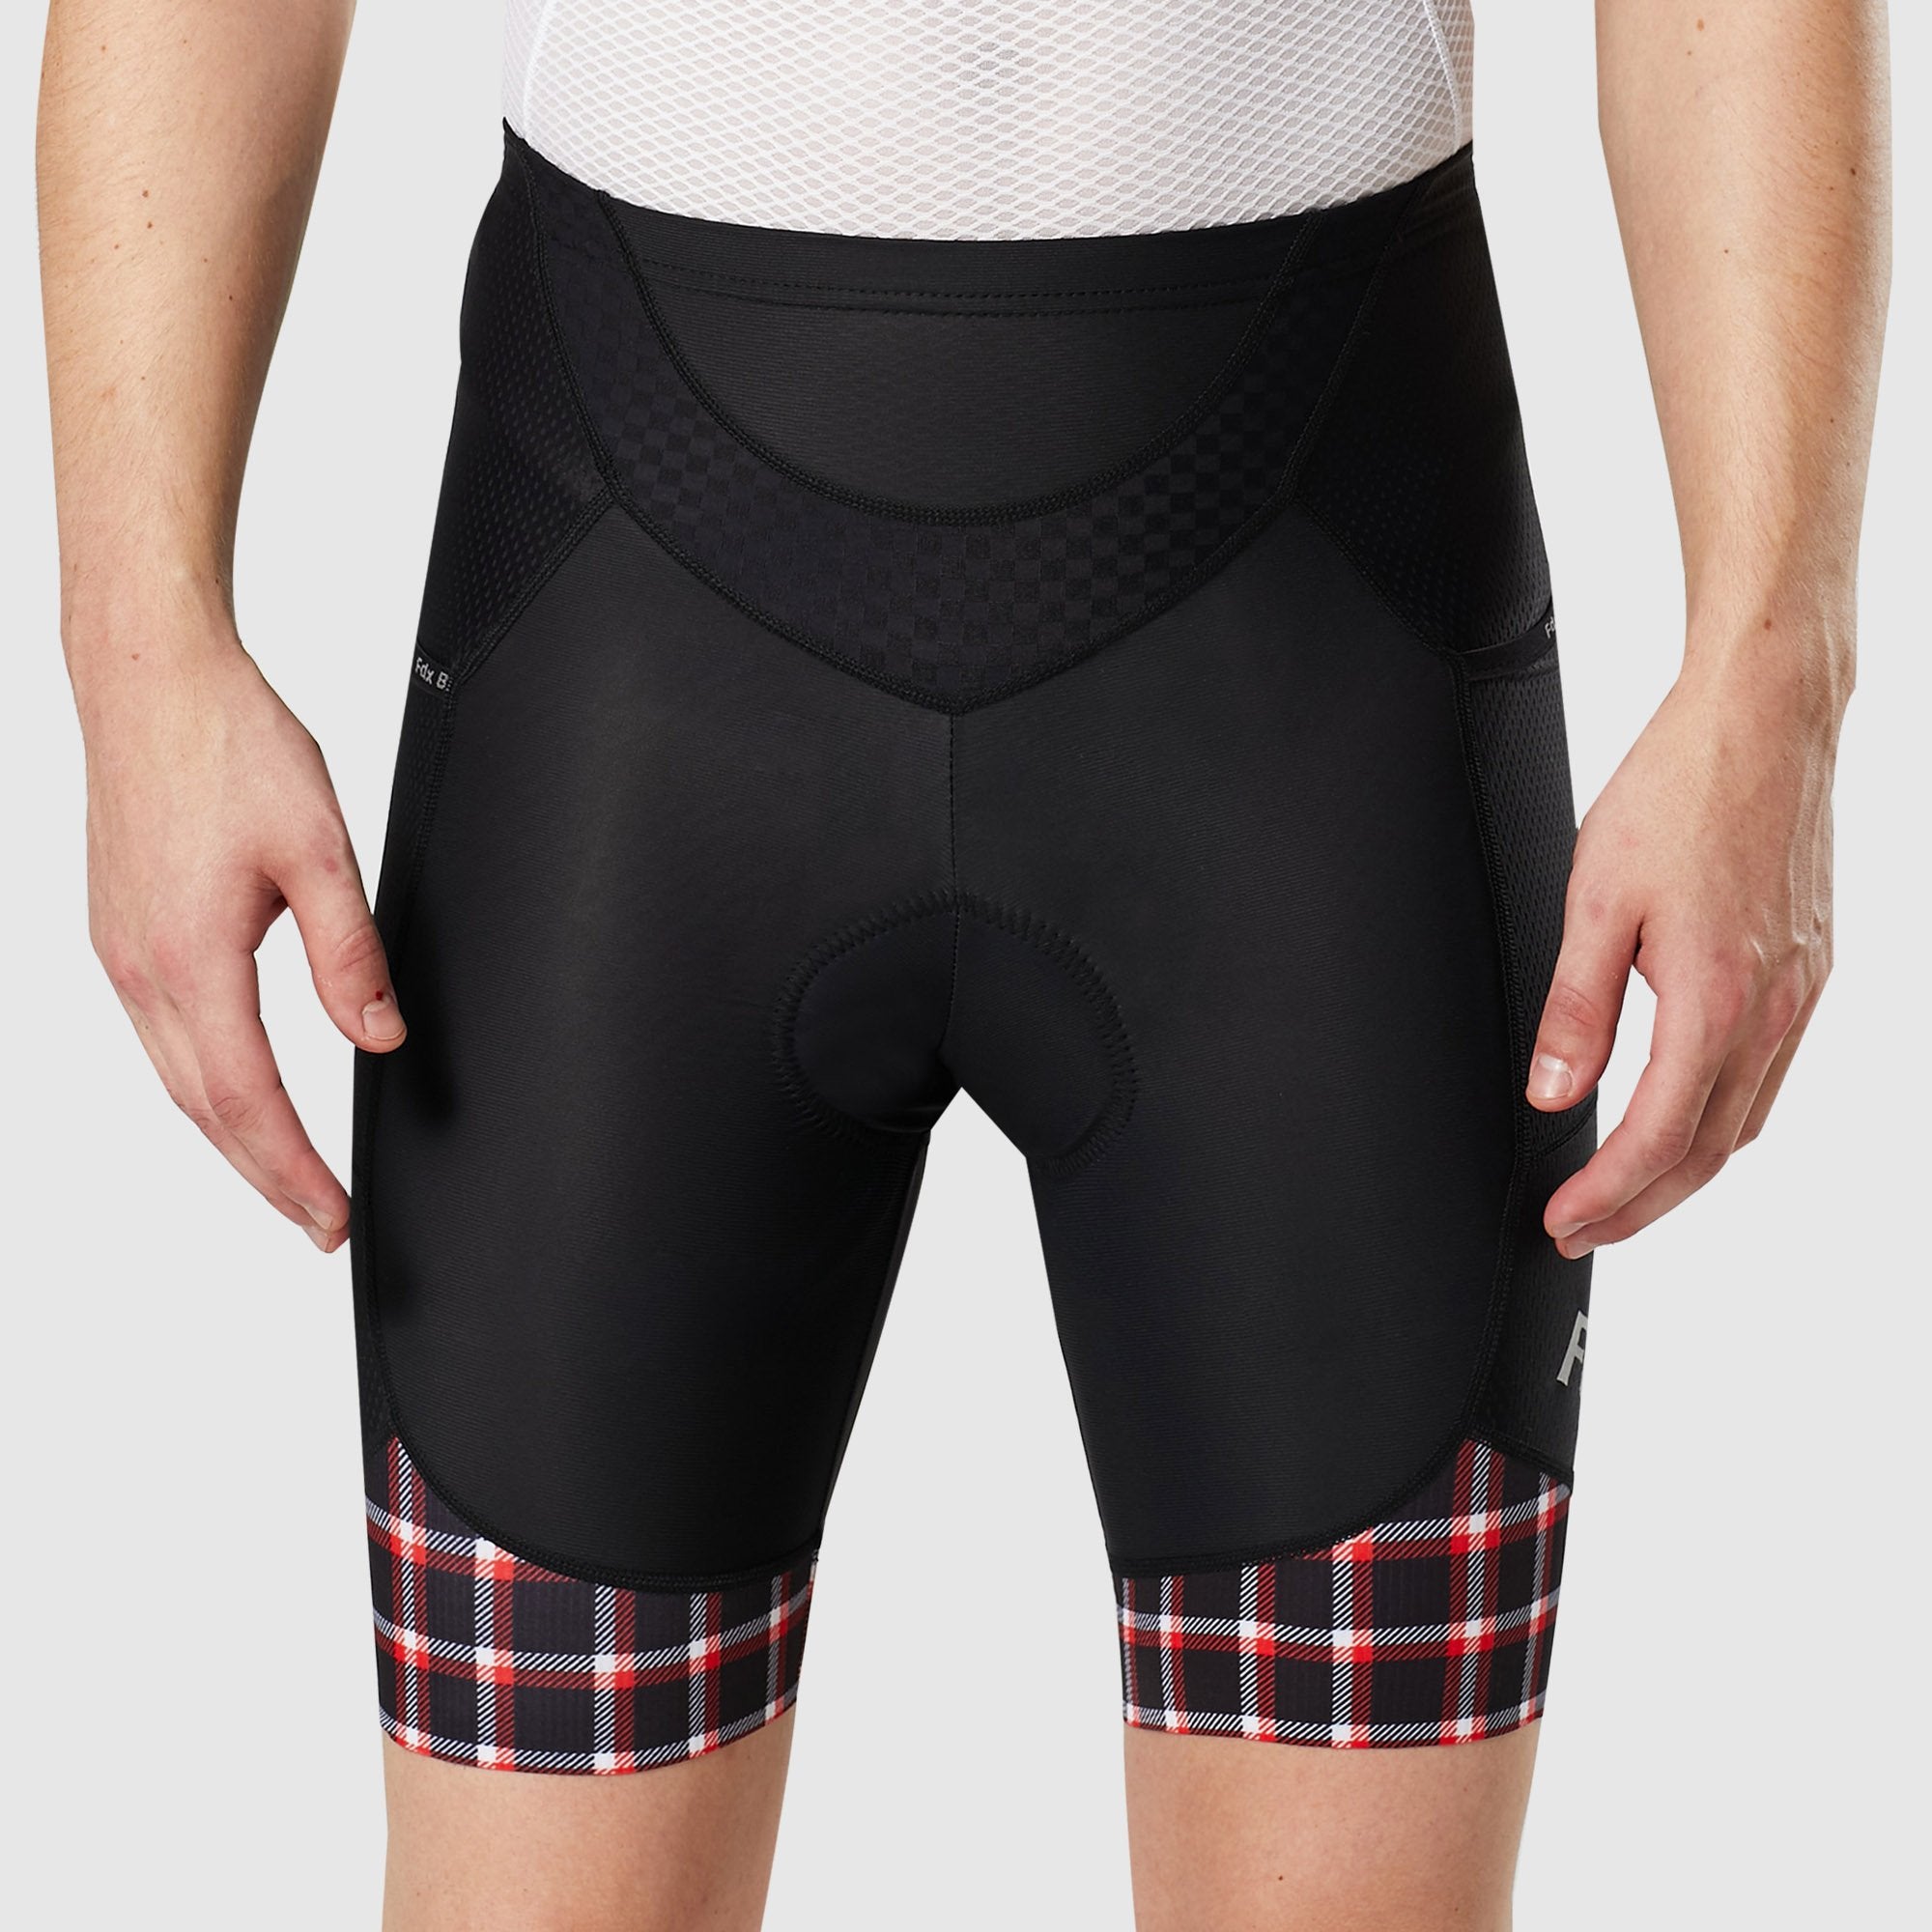 mens padded bike shorts with pockets